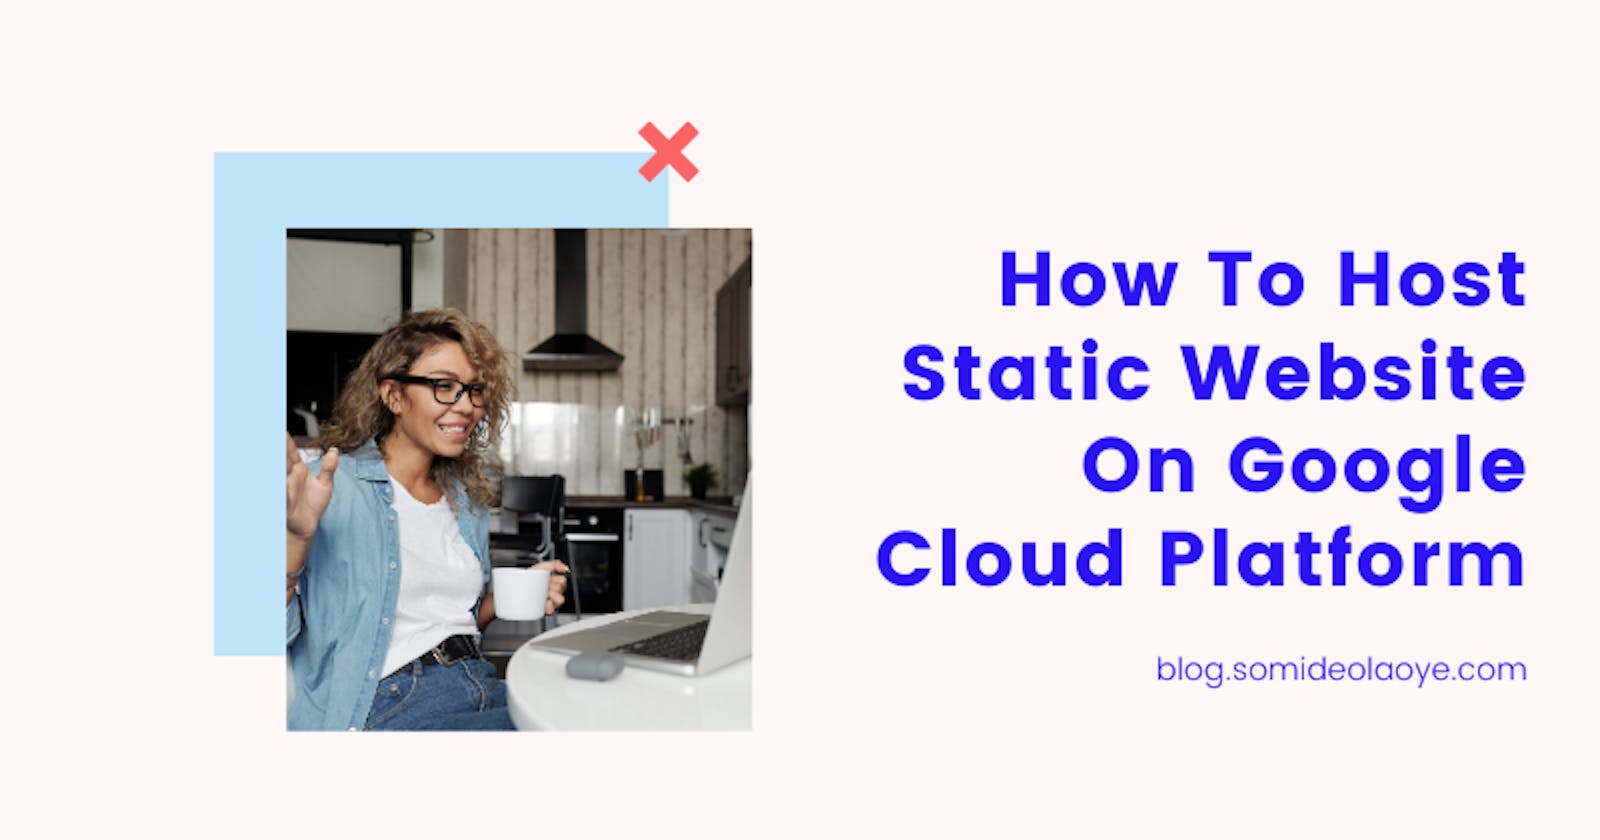 How To Host Static Website On Google Cloud Platform